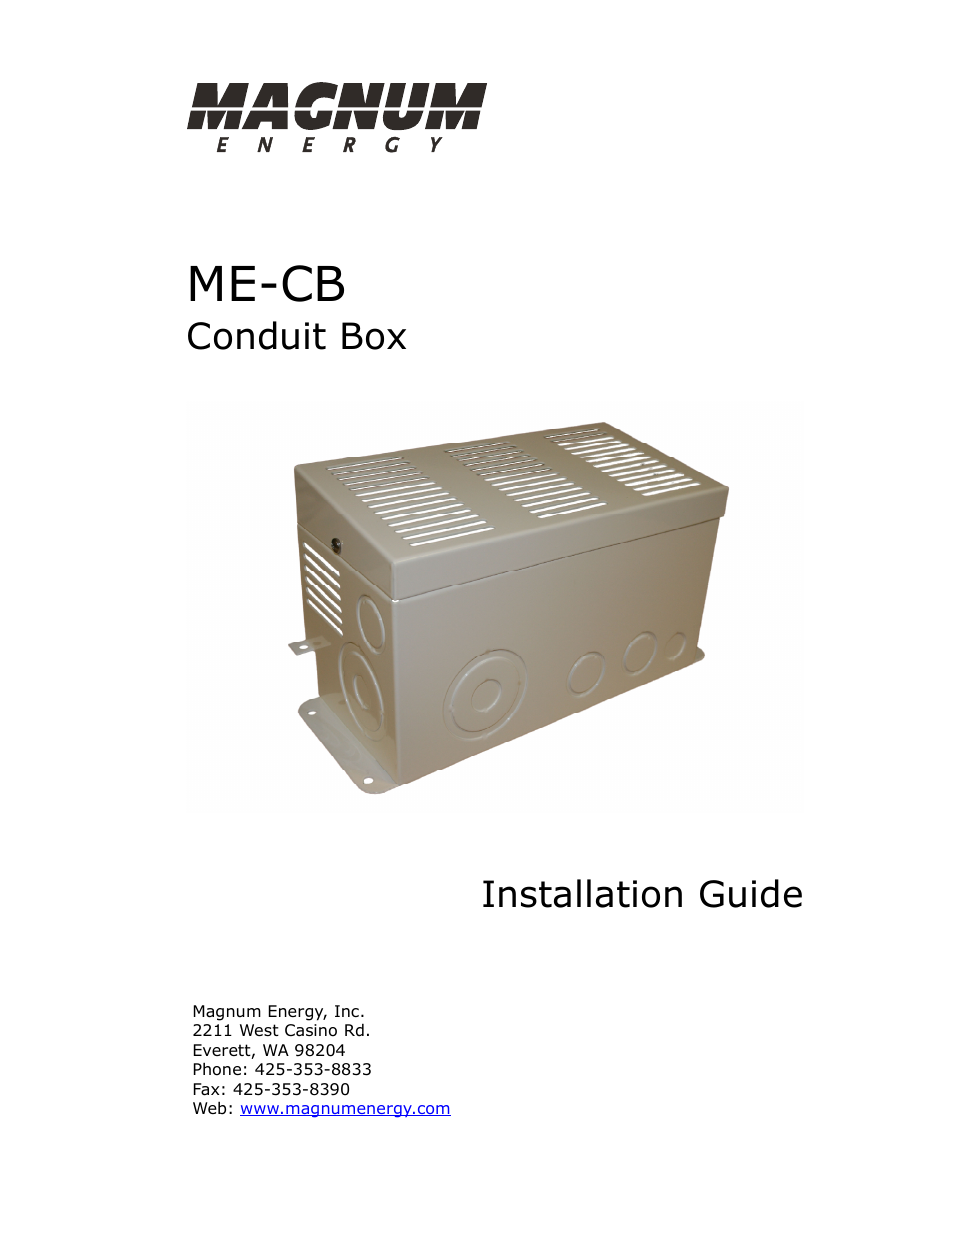 Conduit Box (ME-CB)